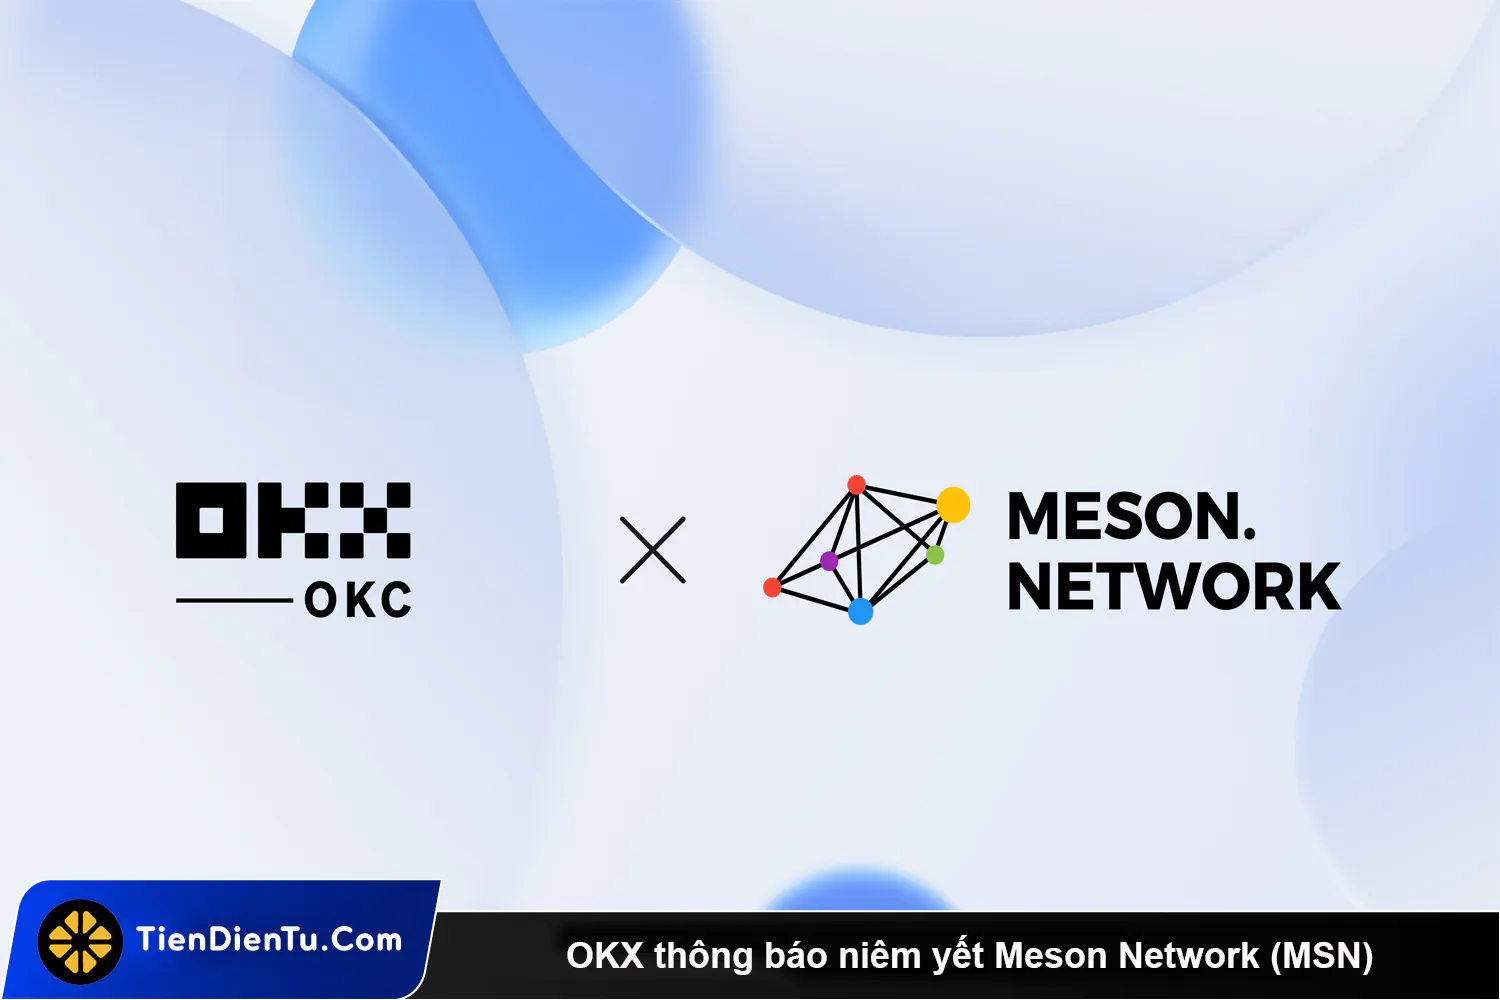 OKX thong bao niem yet Meson Network MSN